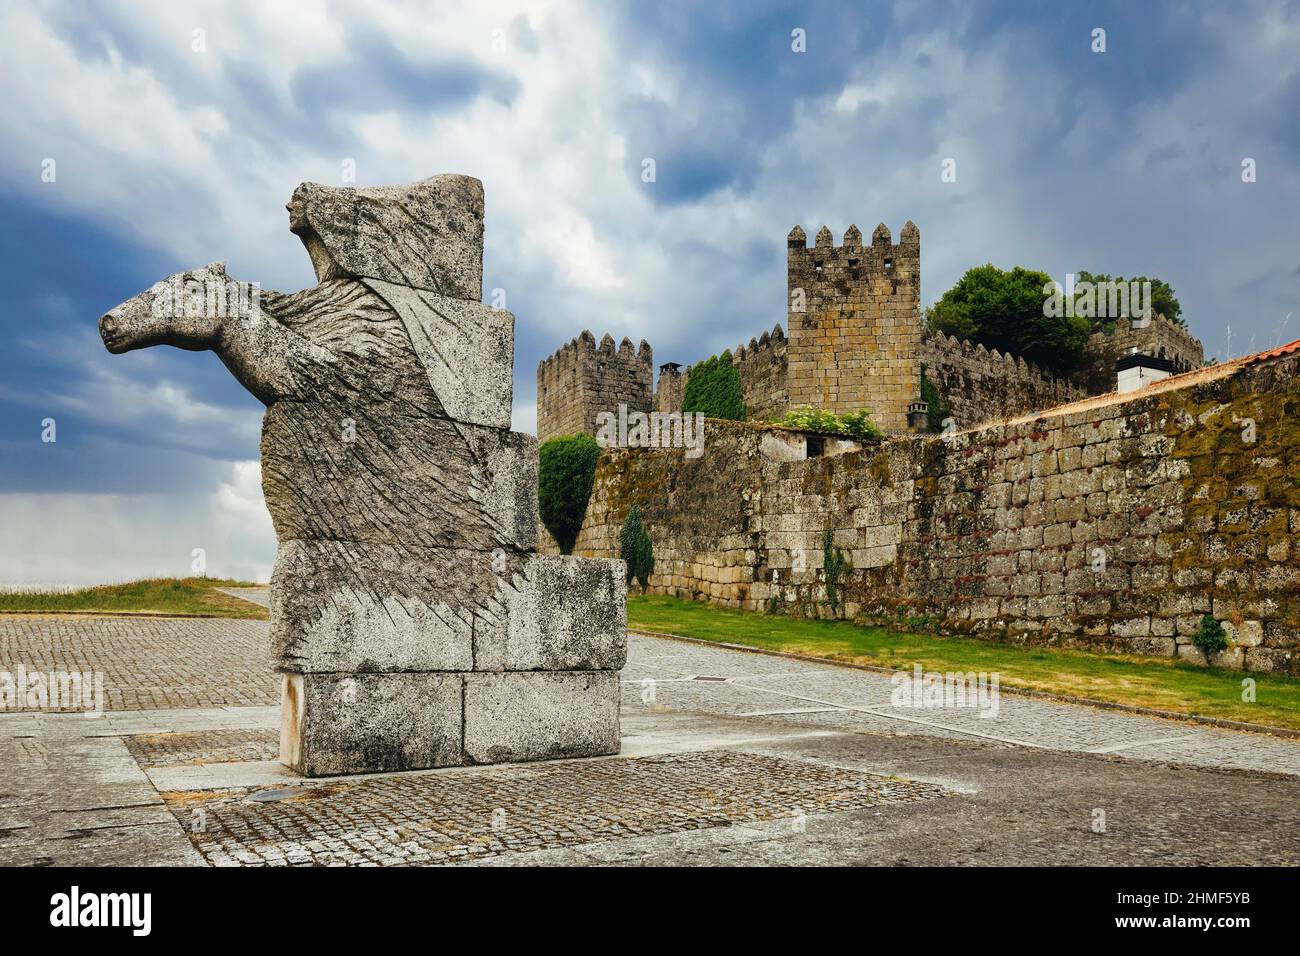 Statue des legendären Joao Ticao in der Nähe des Verrats-Tores, Schloss Trancoso, Serra da Estrela, Portugal Stockfoto